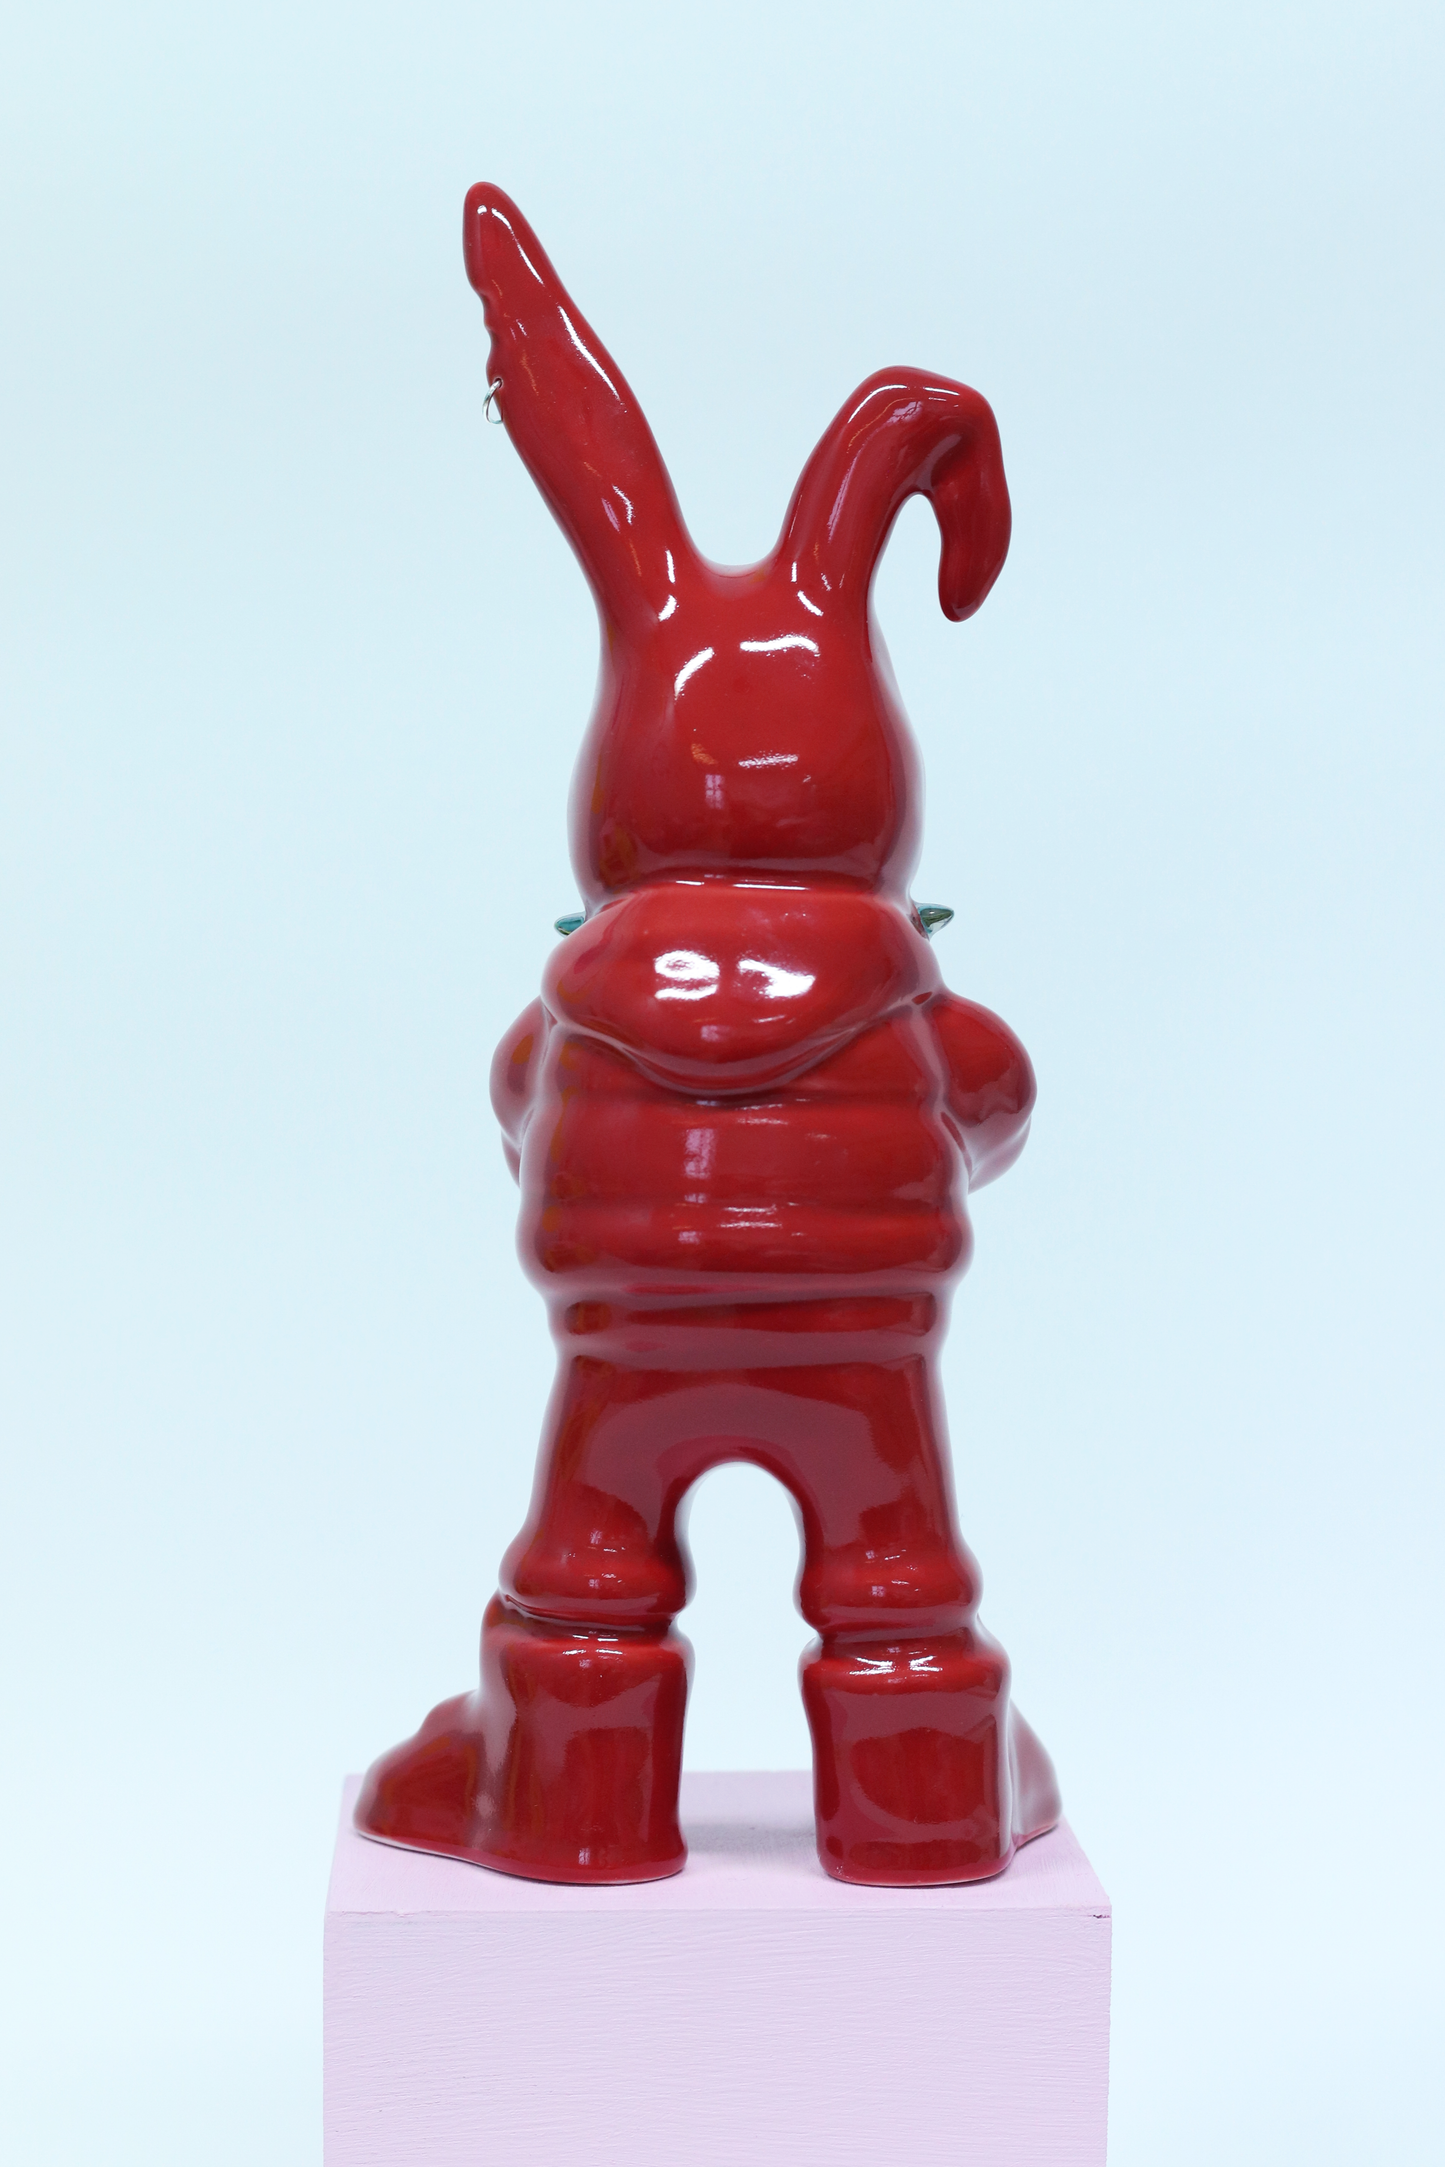 Tuulikki Bunny - red ceramic artwork